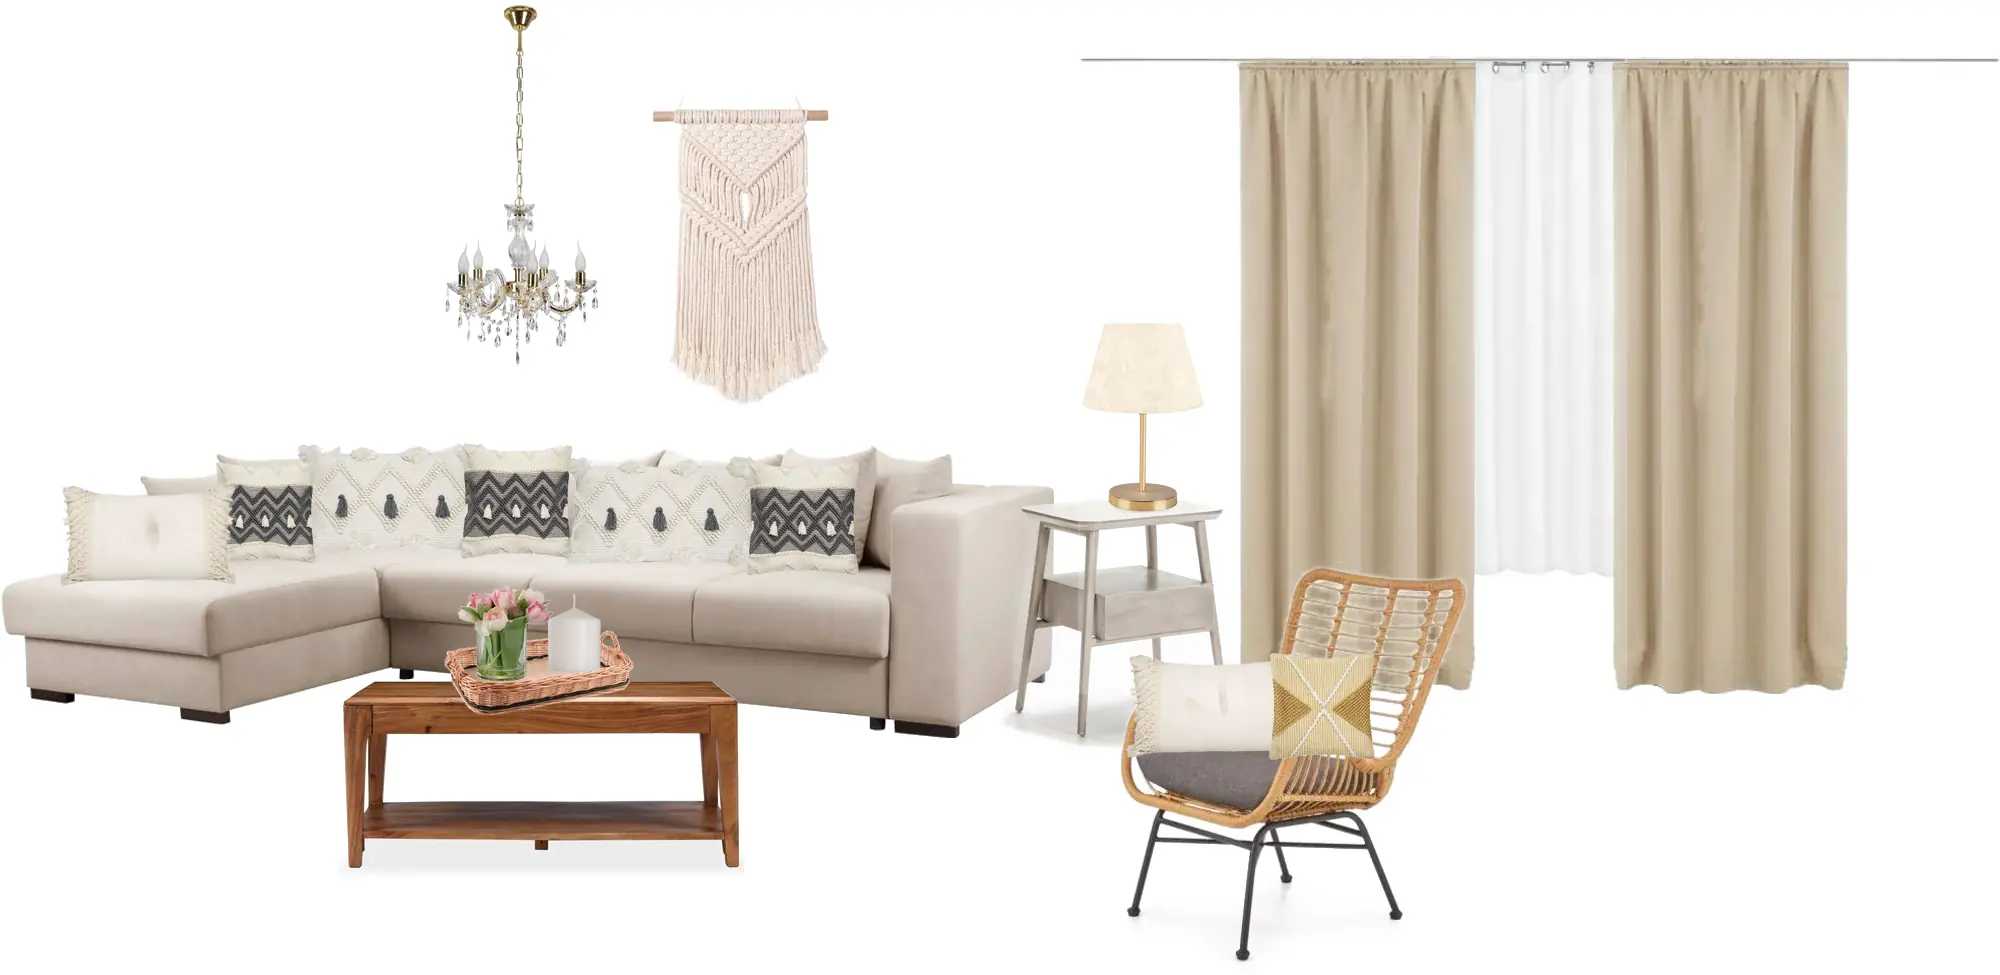 Romantic style living room #bianoblogger